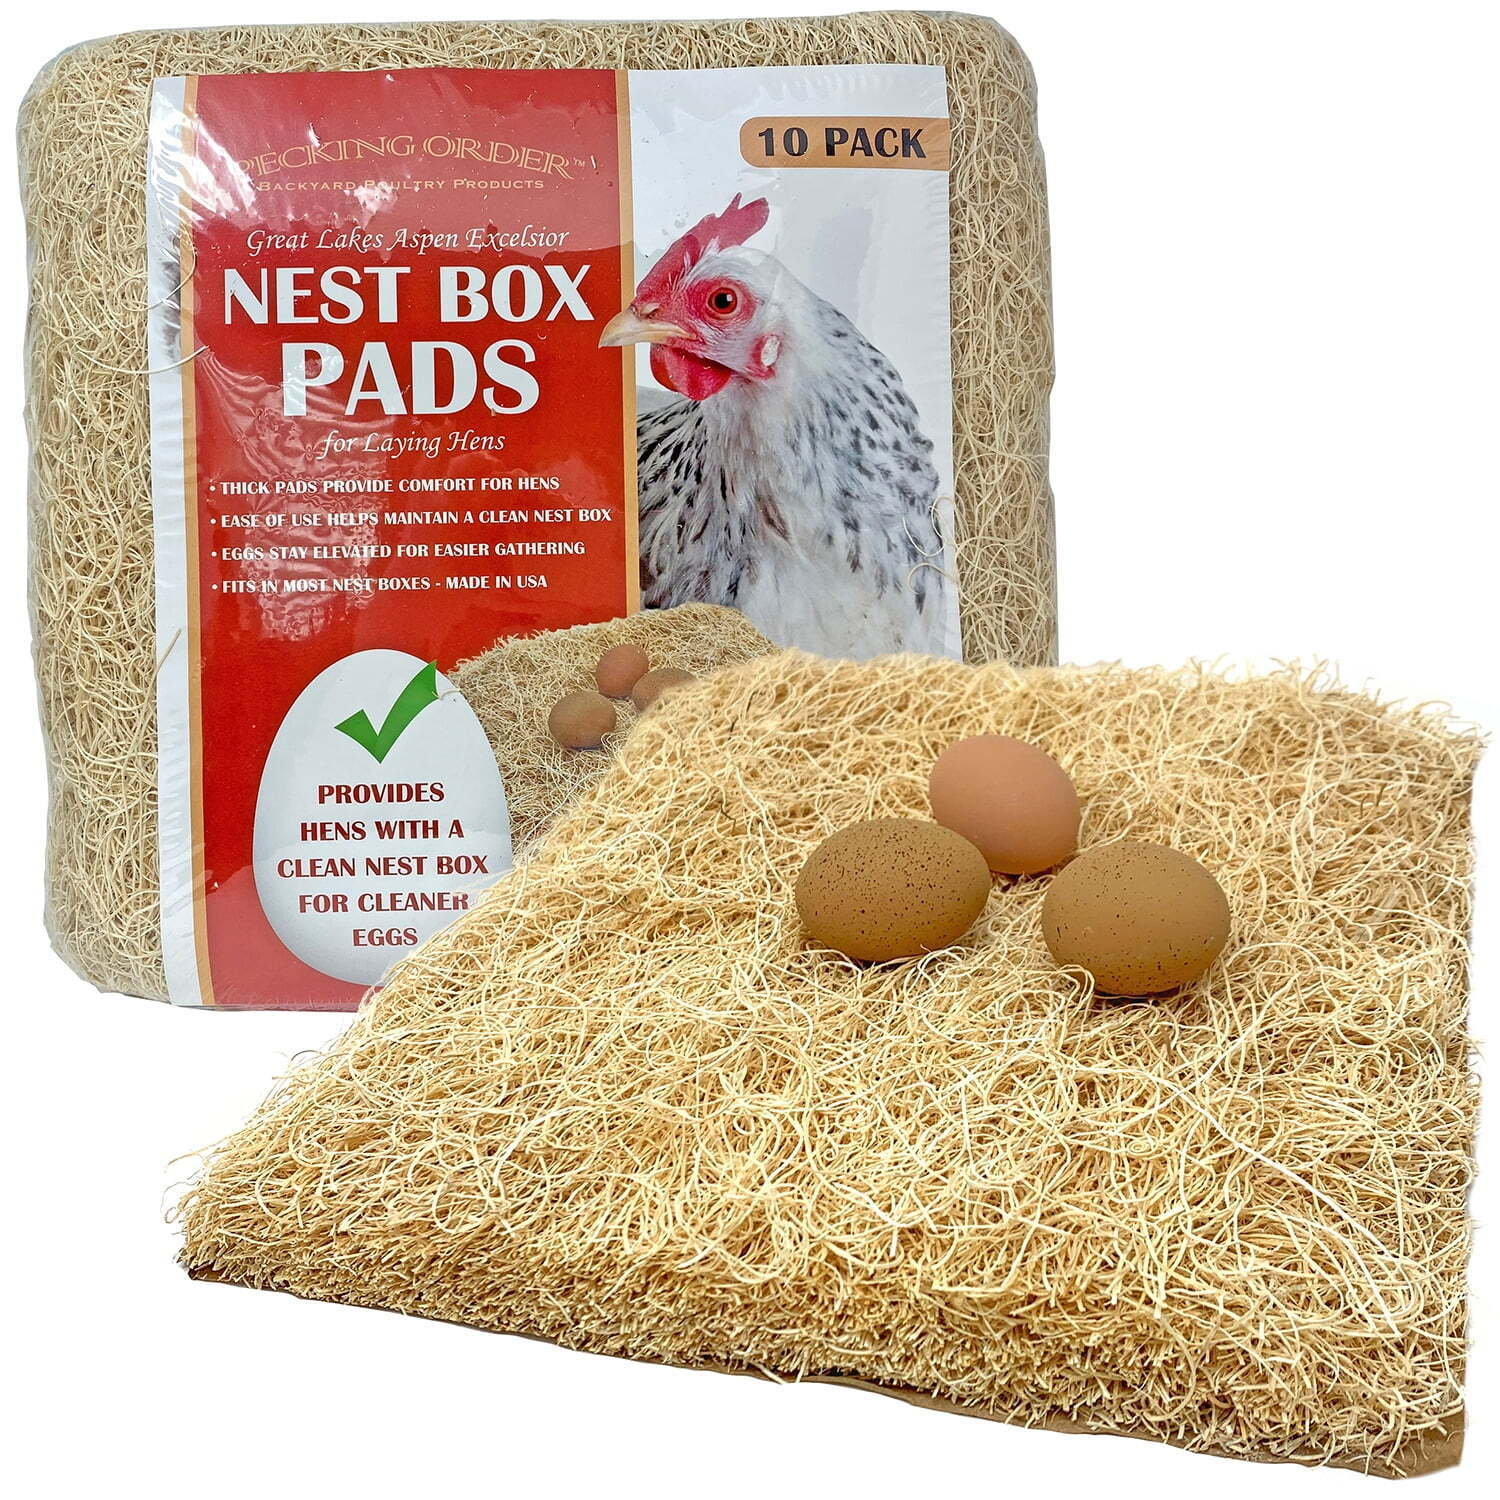 Pecking Order Chicken Nesting Mats 10 Pack made of wood fiber. Brown color